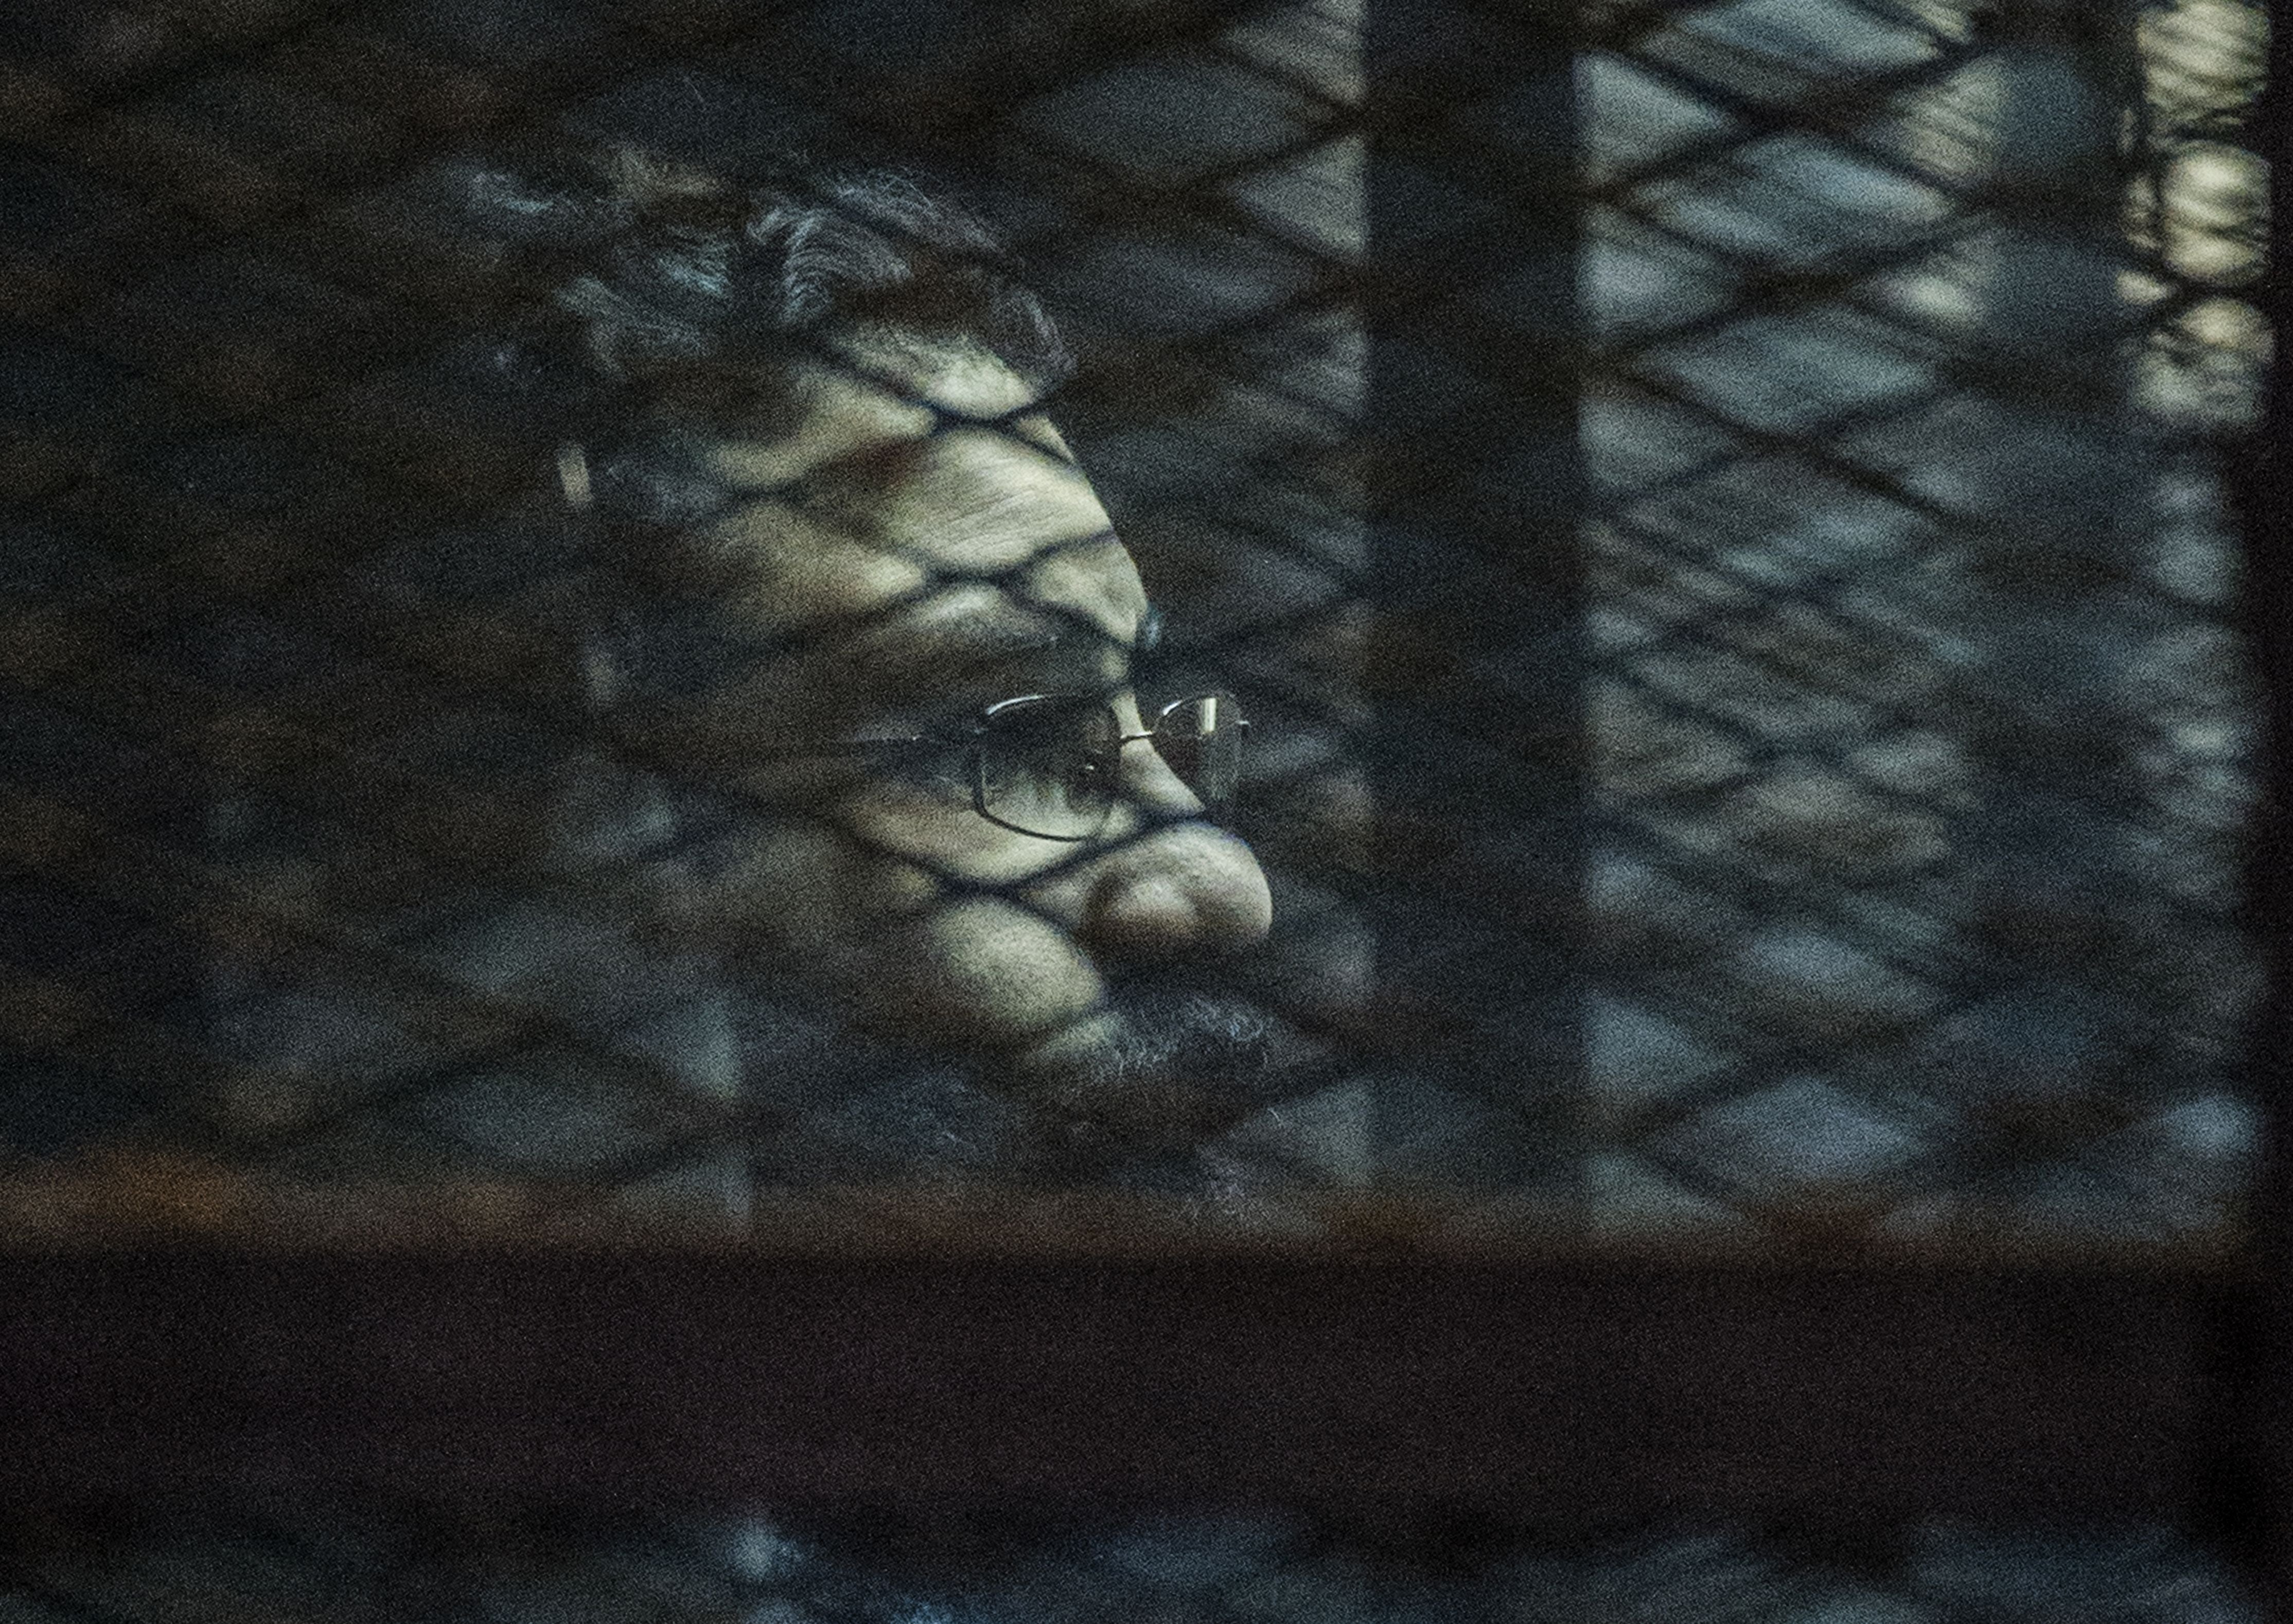 Egyptian activist and blogger Alaa Abdel El-Fattah has spent 1,000 days behind bars